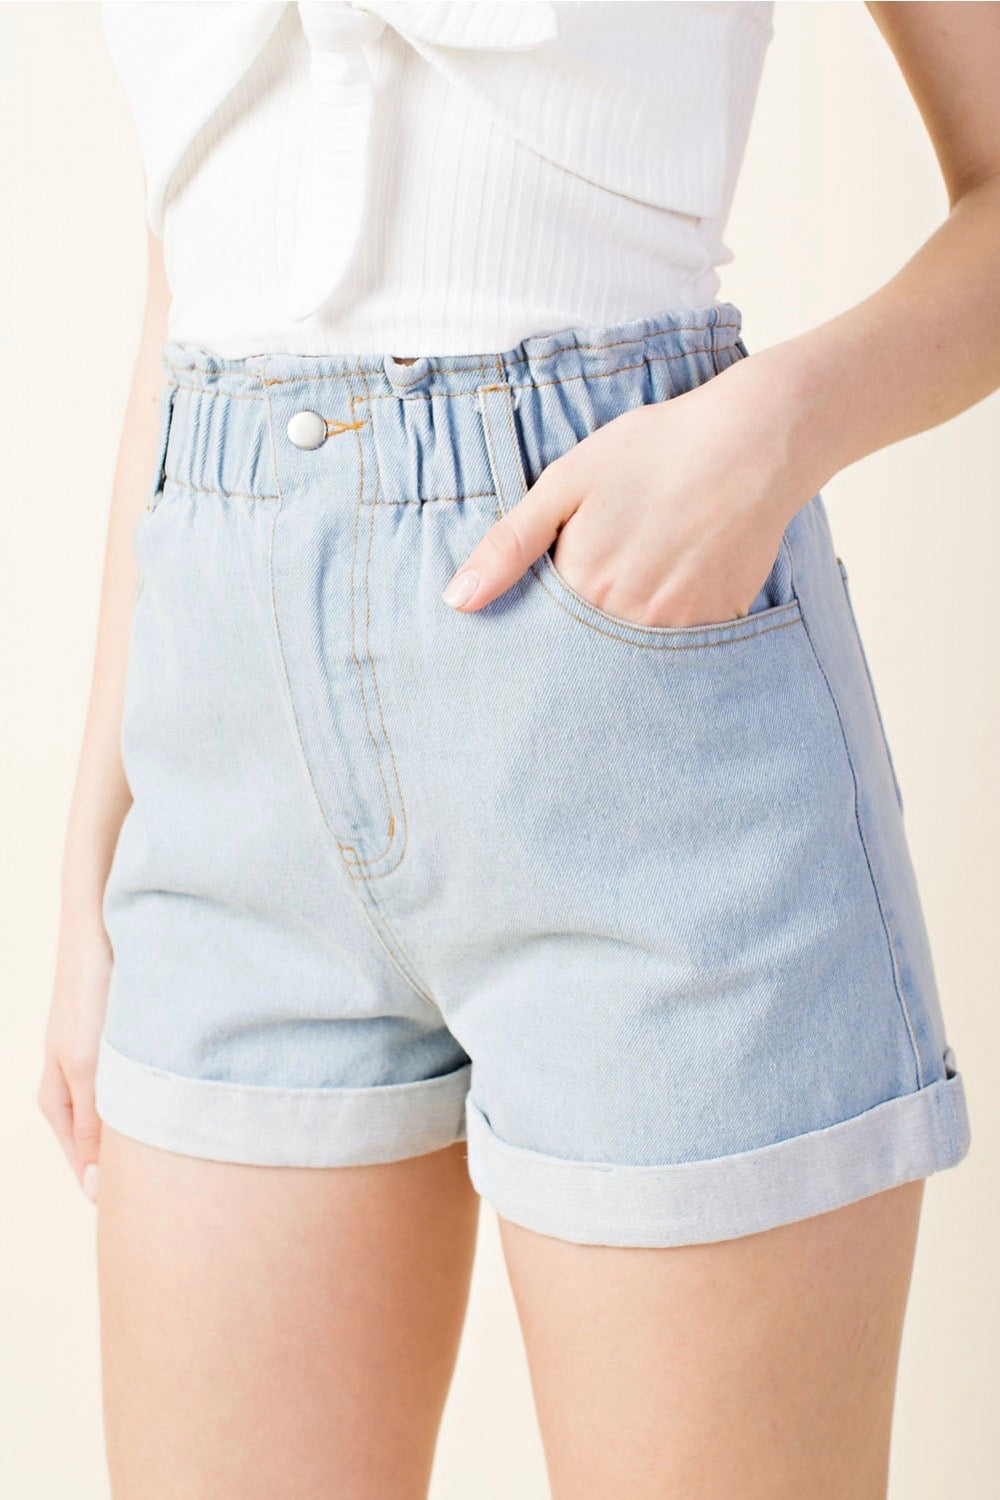 cool jean shorts